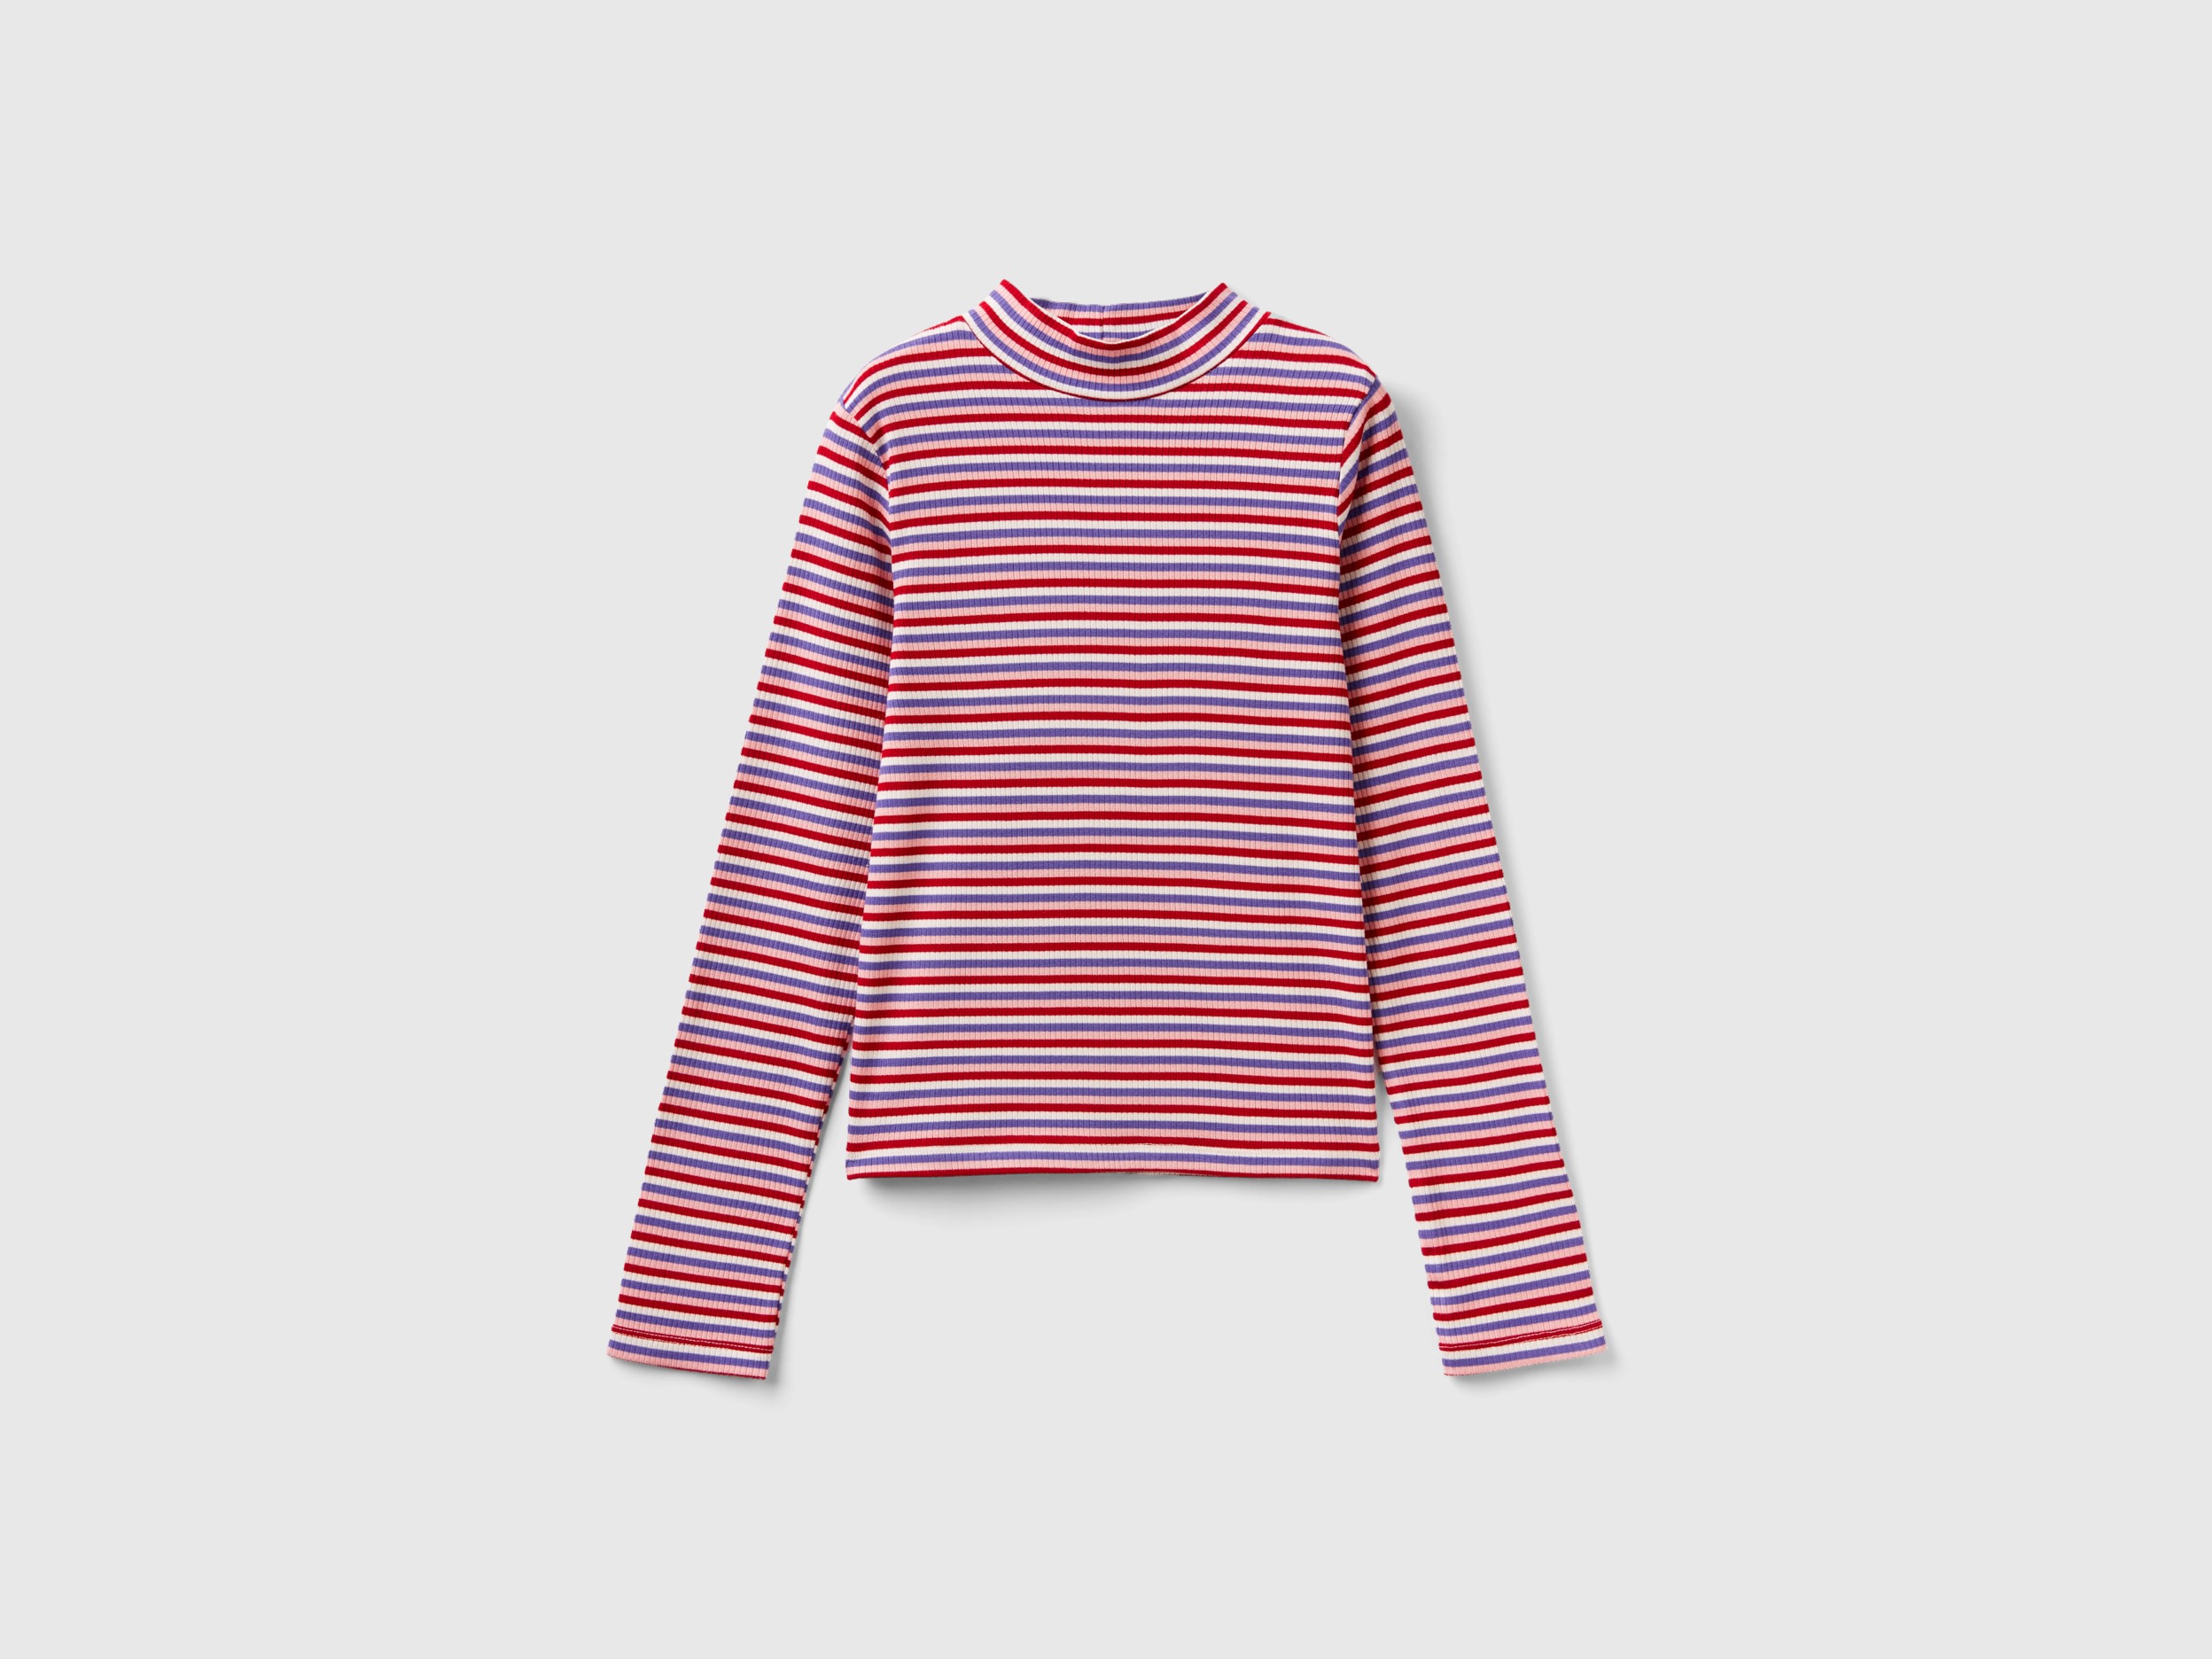 Benetton, Striped Turtleneck T-shirt, size 2XL, Multi-color, Kids